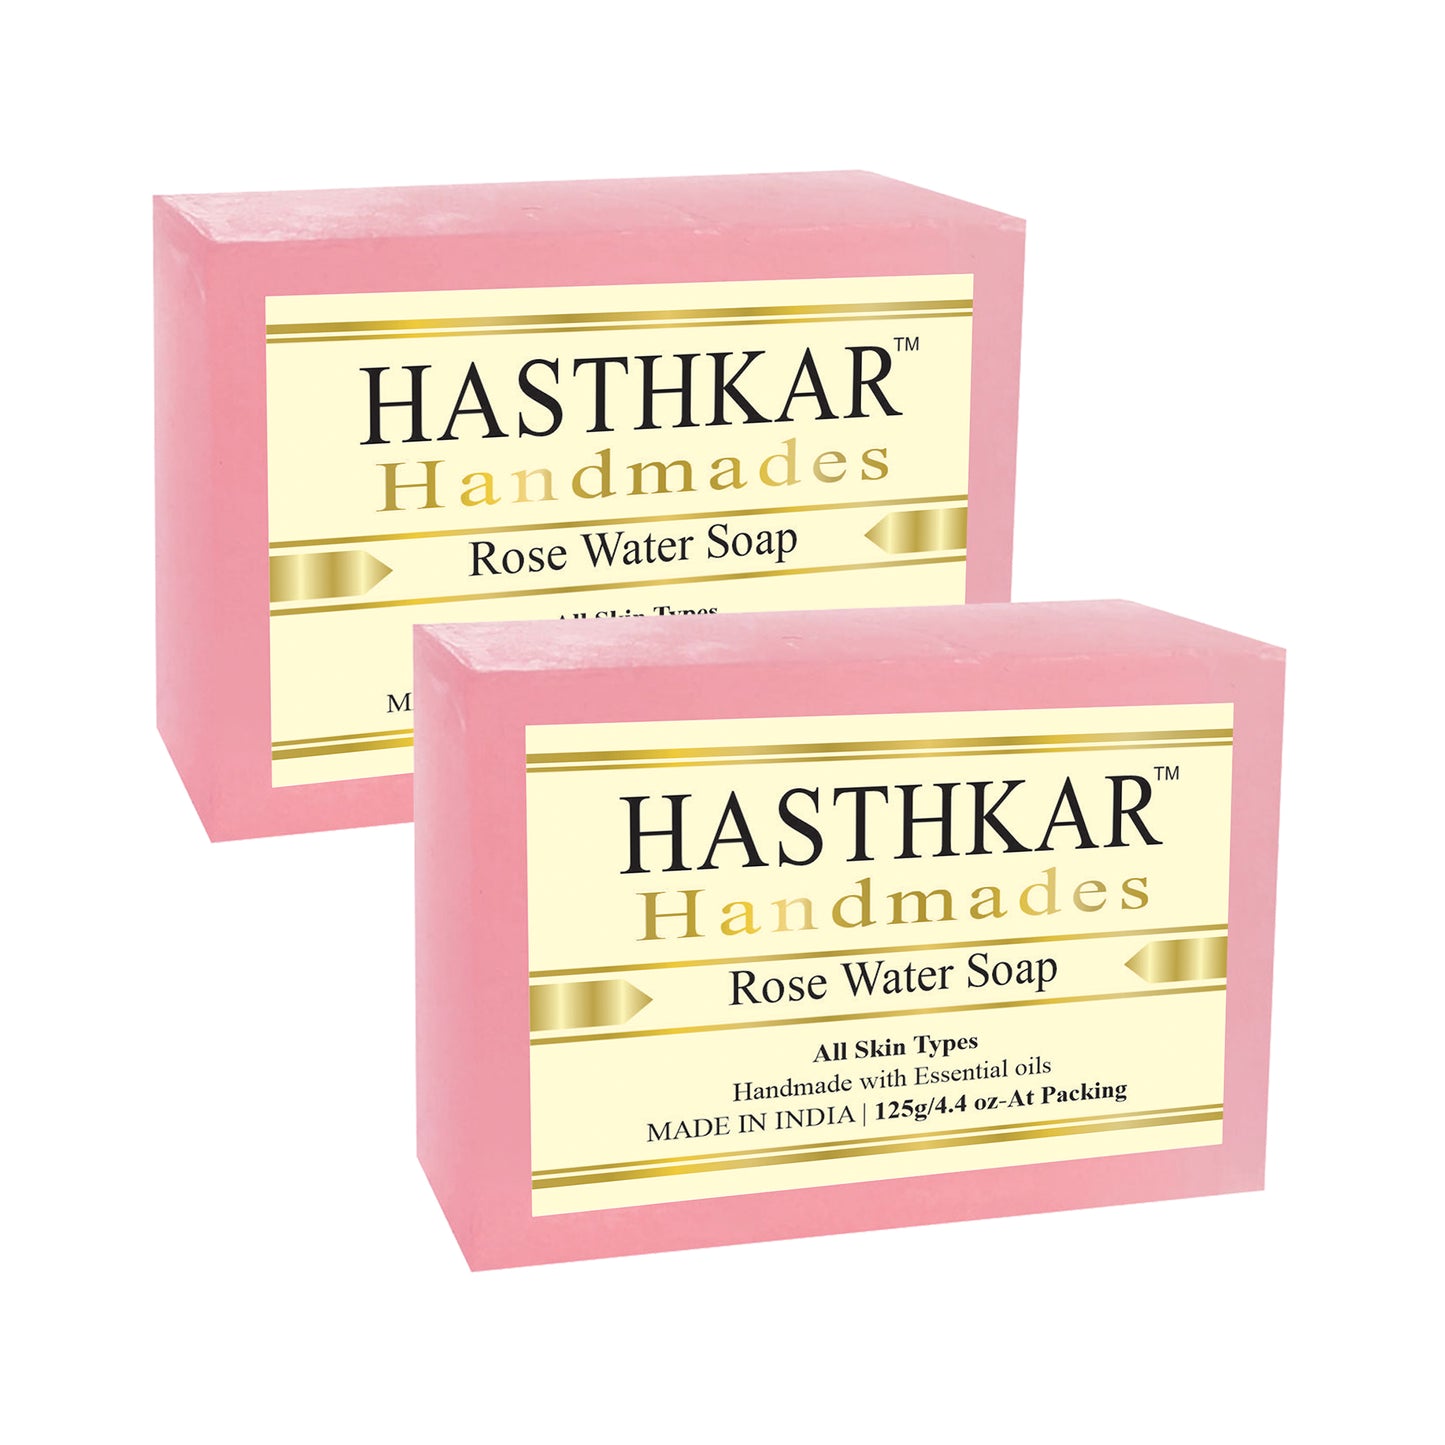 Hasthkar Handmades Glycerine Rose water Soap 125gm Pack of 2